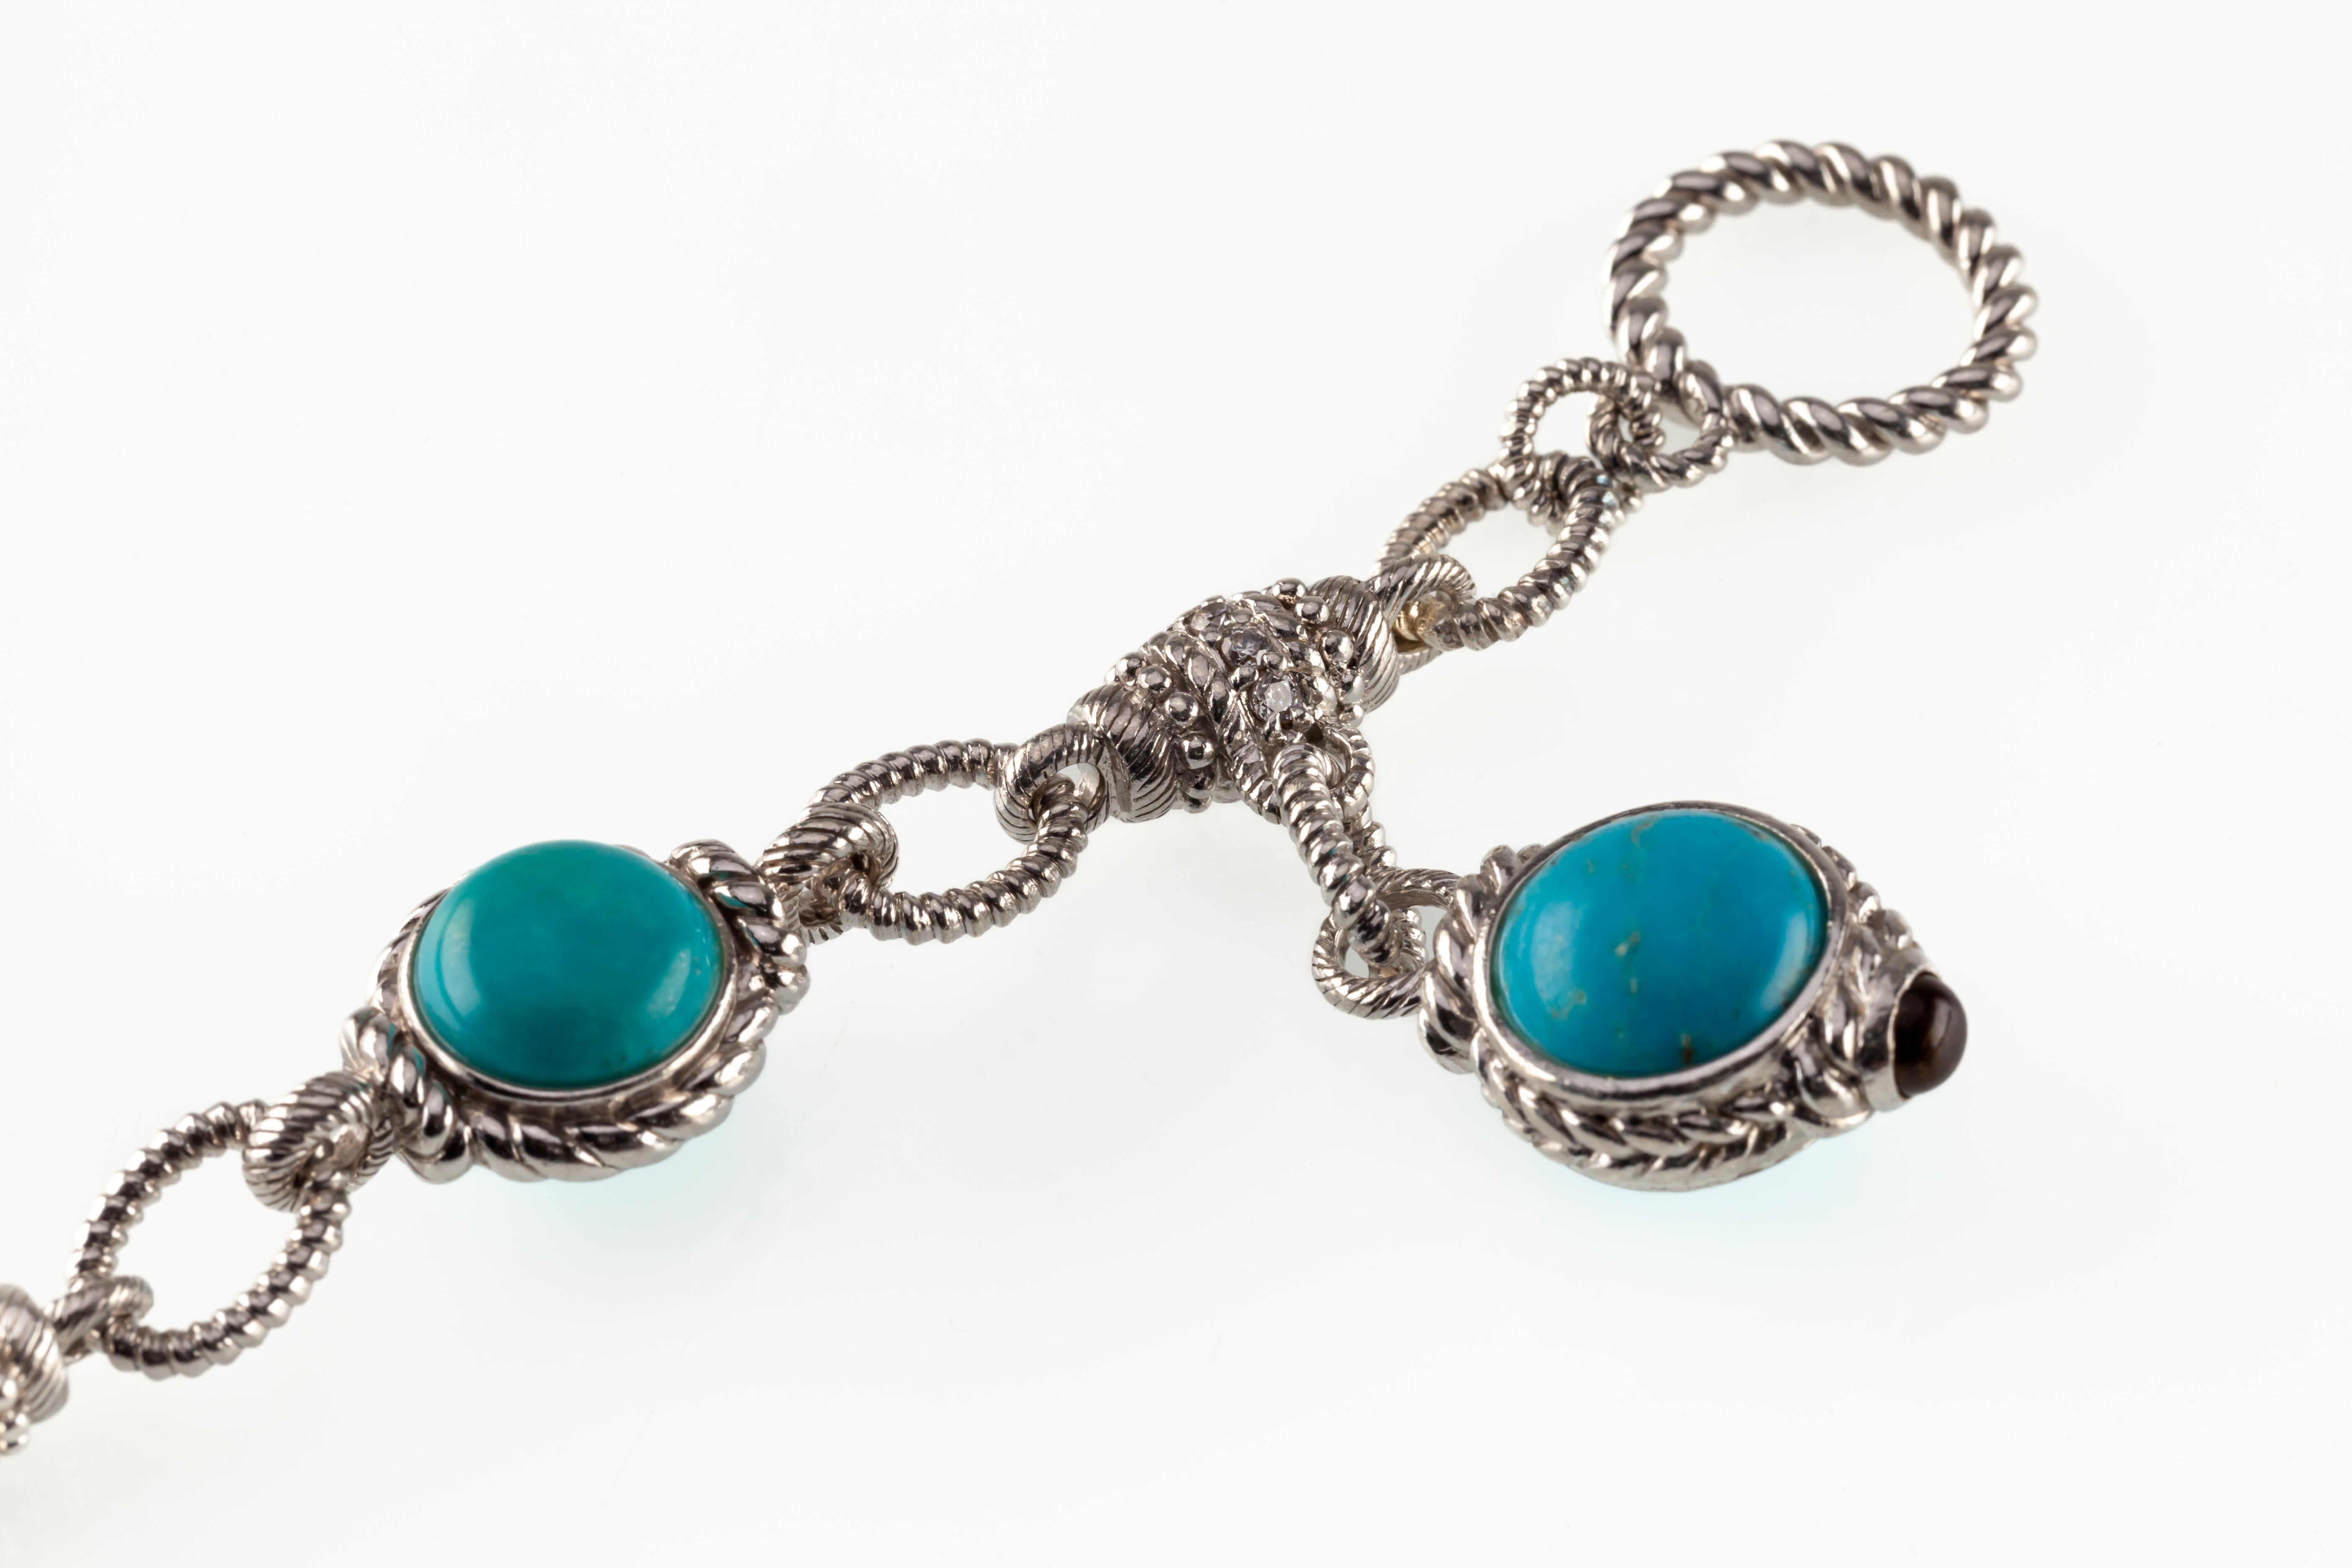 Modern Judith Ripka Sterling Silver Turquoise Sleeping Beauty Bracelet with Charm